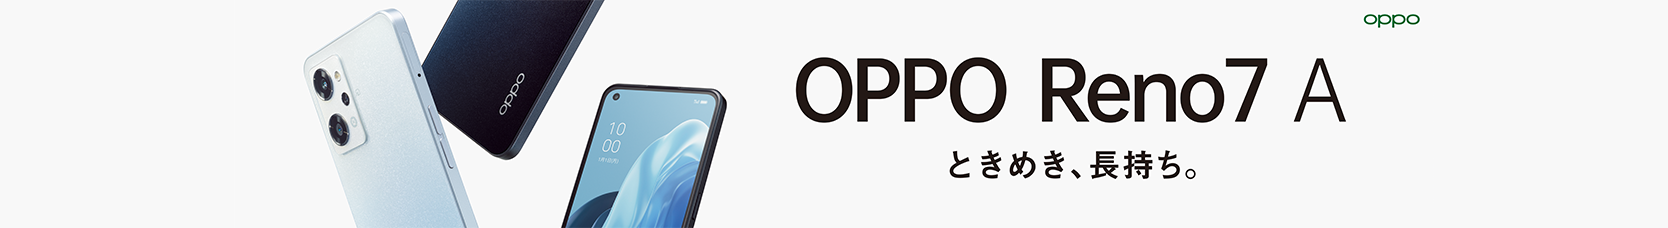 OPPO 世界30ヵ国以上で愛されている スマートフォンブランド